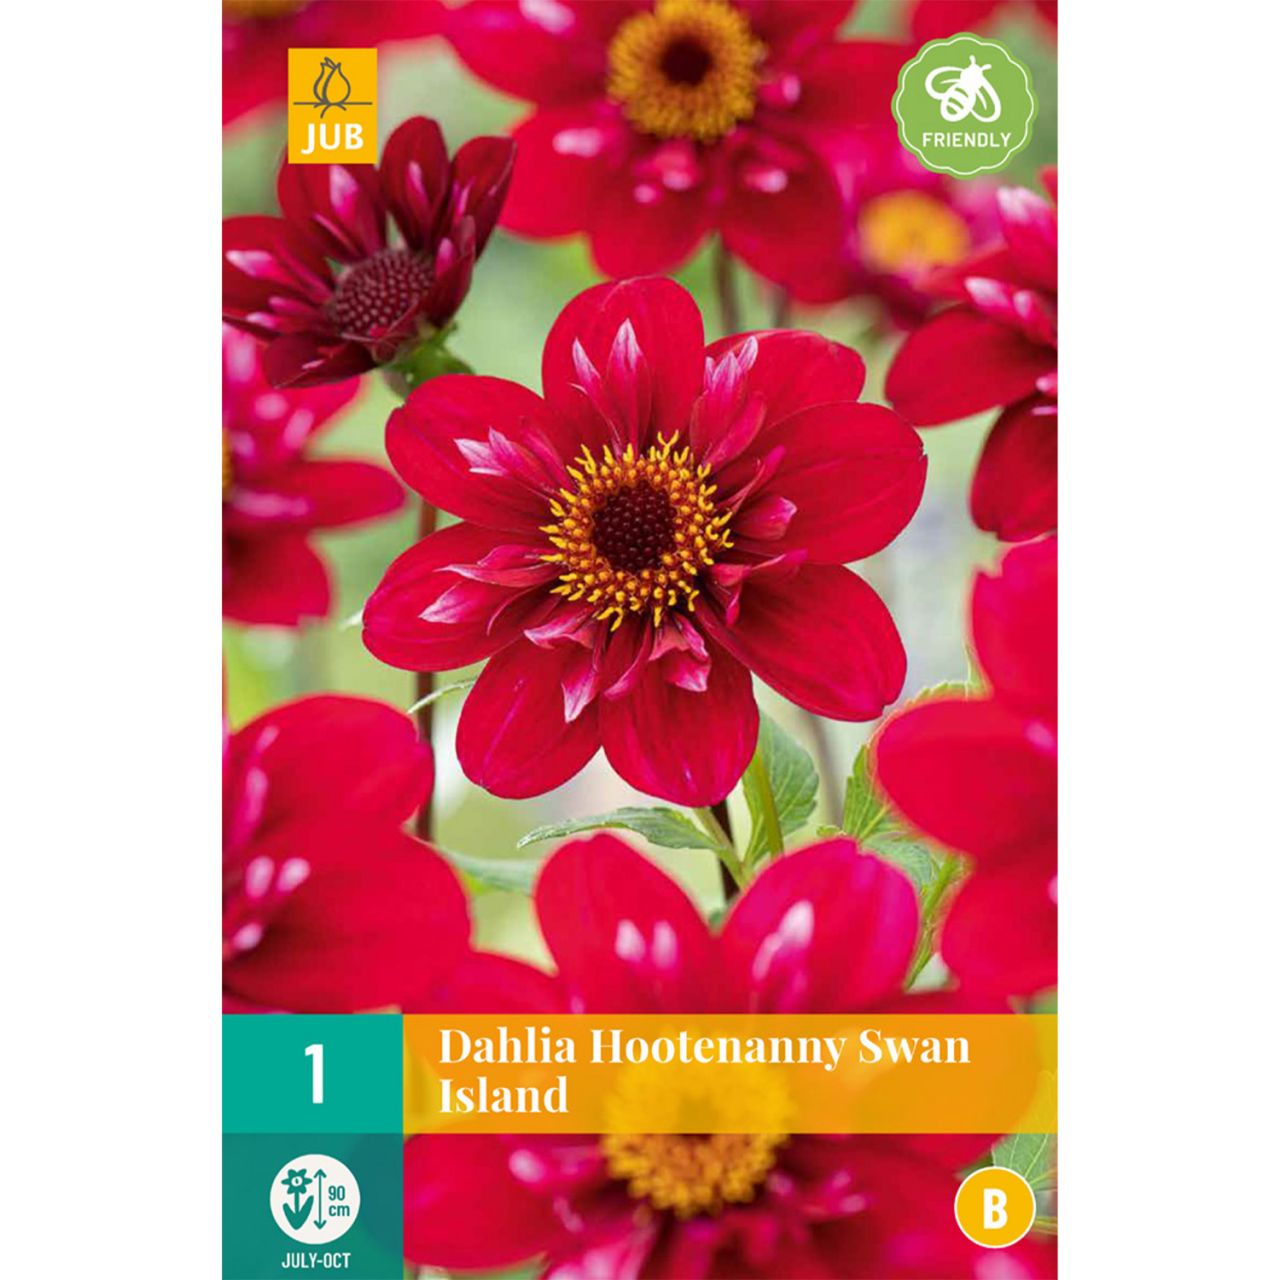 Kategorie <b>Frühlings-Blumenzwiebeln </b> - Halskrausen-Dahlie 'Hootenanny-Swan Island', 1 Stück - Dahlia 'Hootenanny-Swan Island'